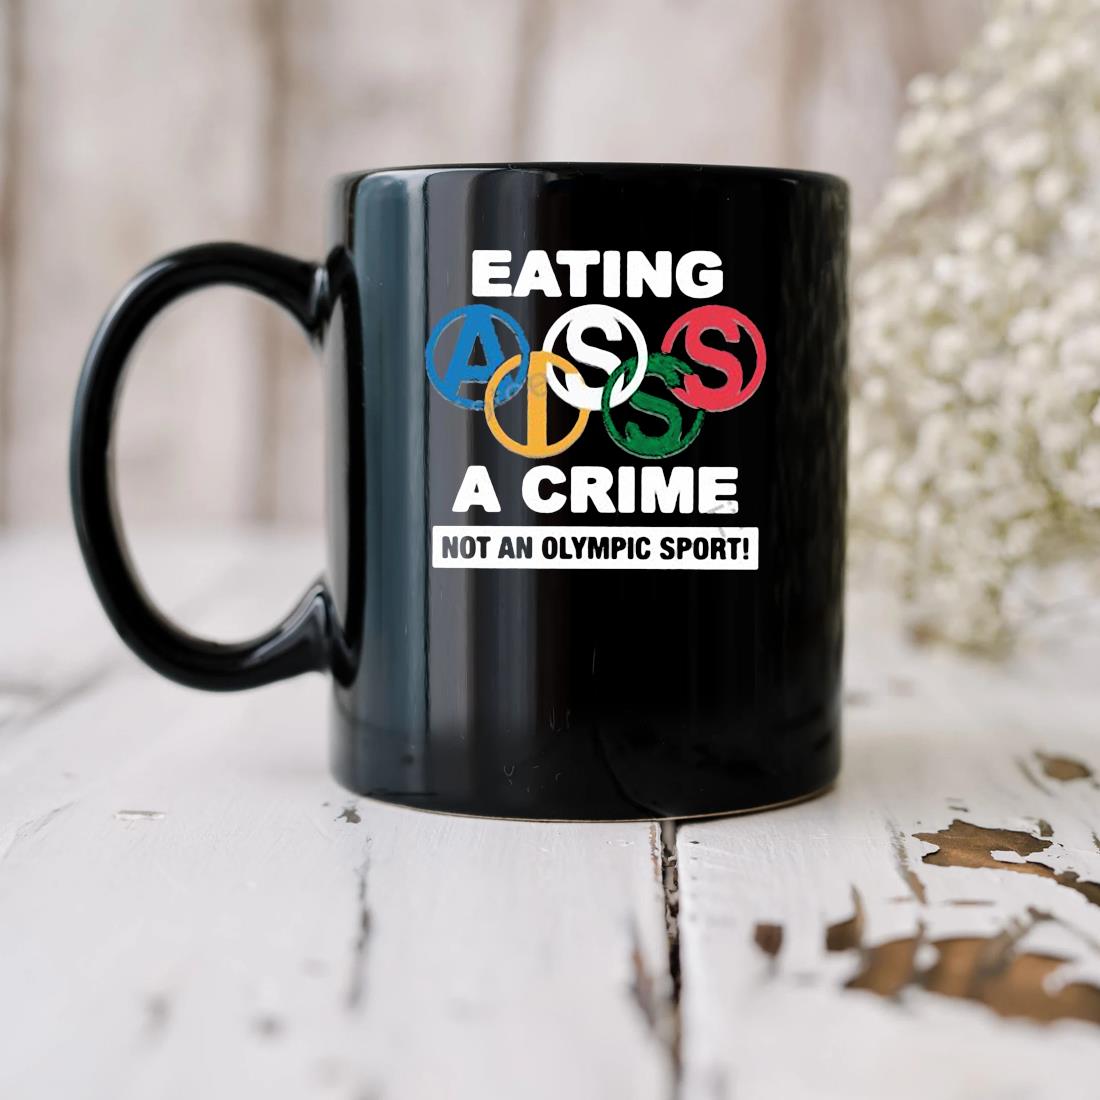 Eating Ass Is A Crime Not An Olympic Sport Mug